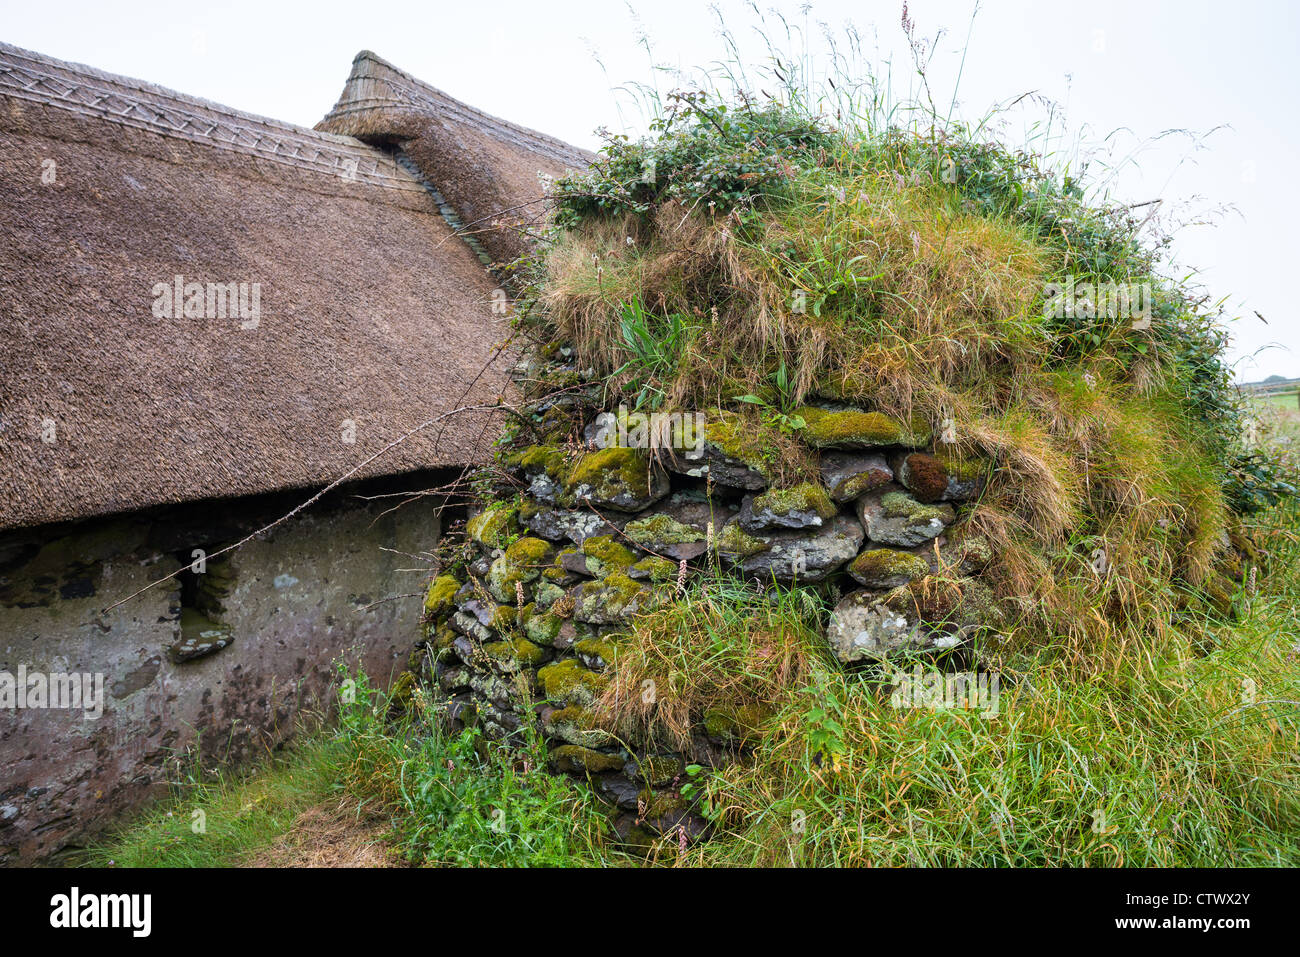 Celtic Trockenmauer corbelled Beehive hut mit Hunger Cottages und Museum, Fahan, Halbinsel Dingle in der Grafschaft Kerry in Irland. Stockfoto